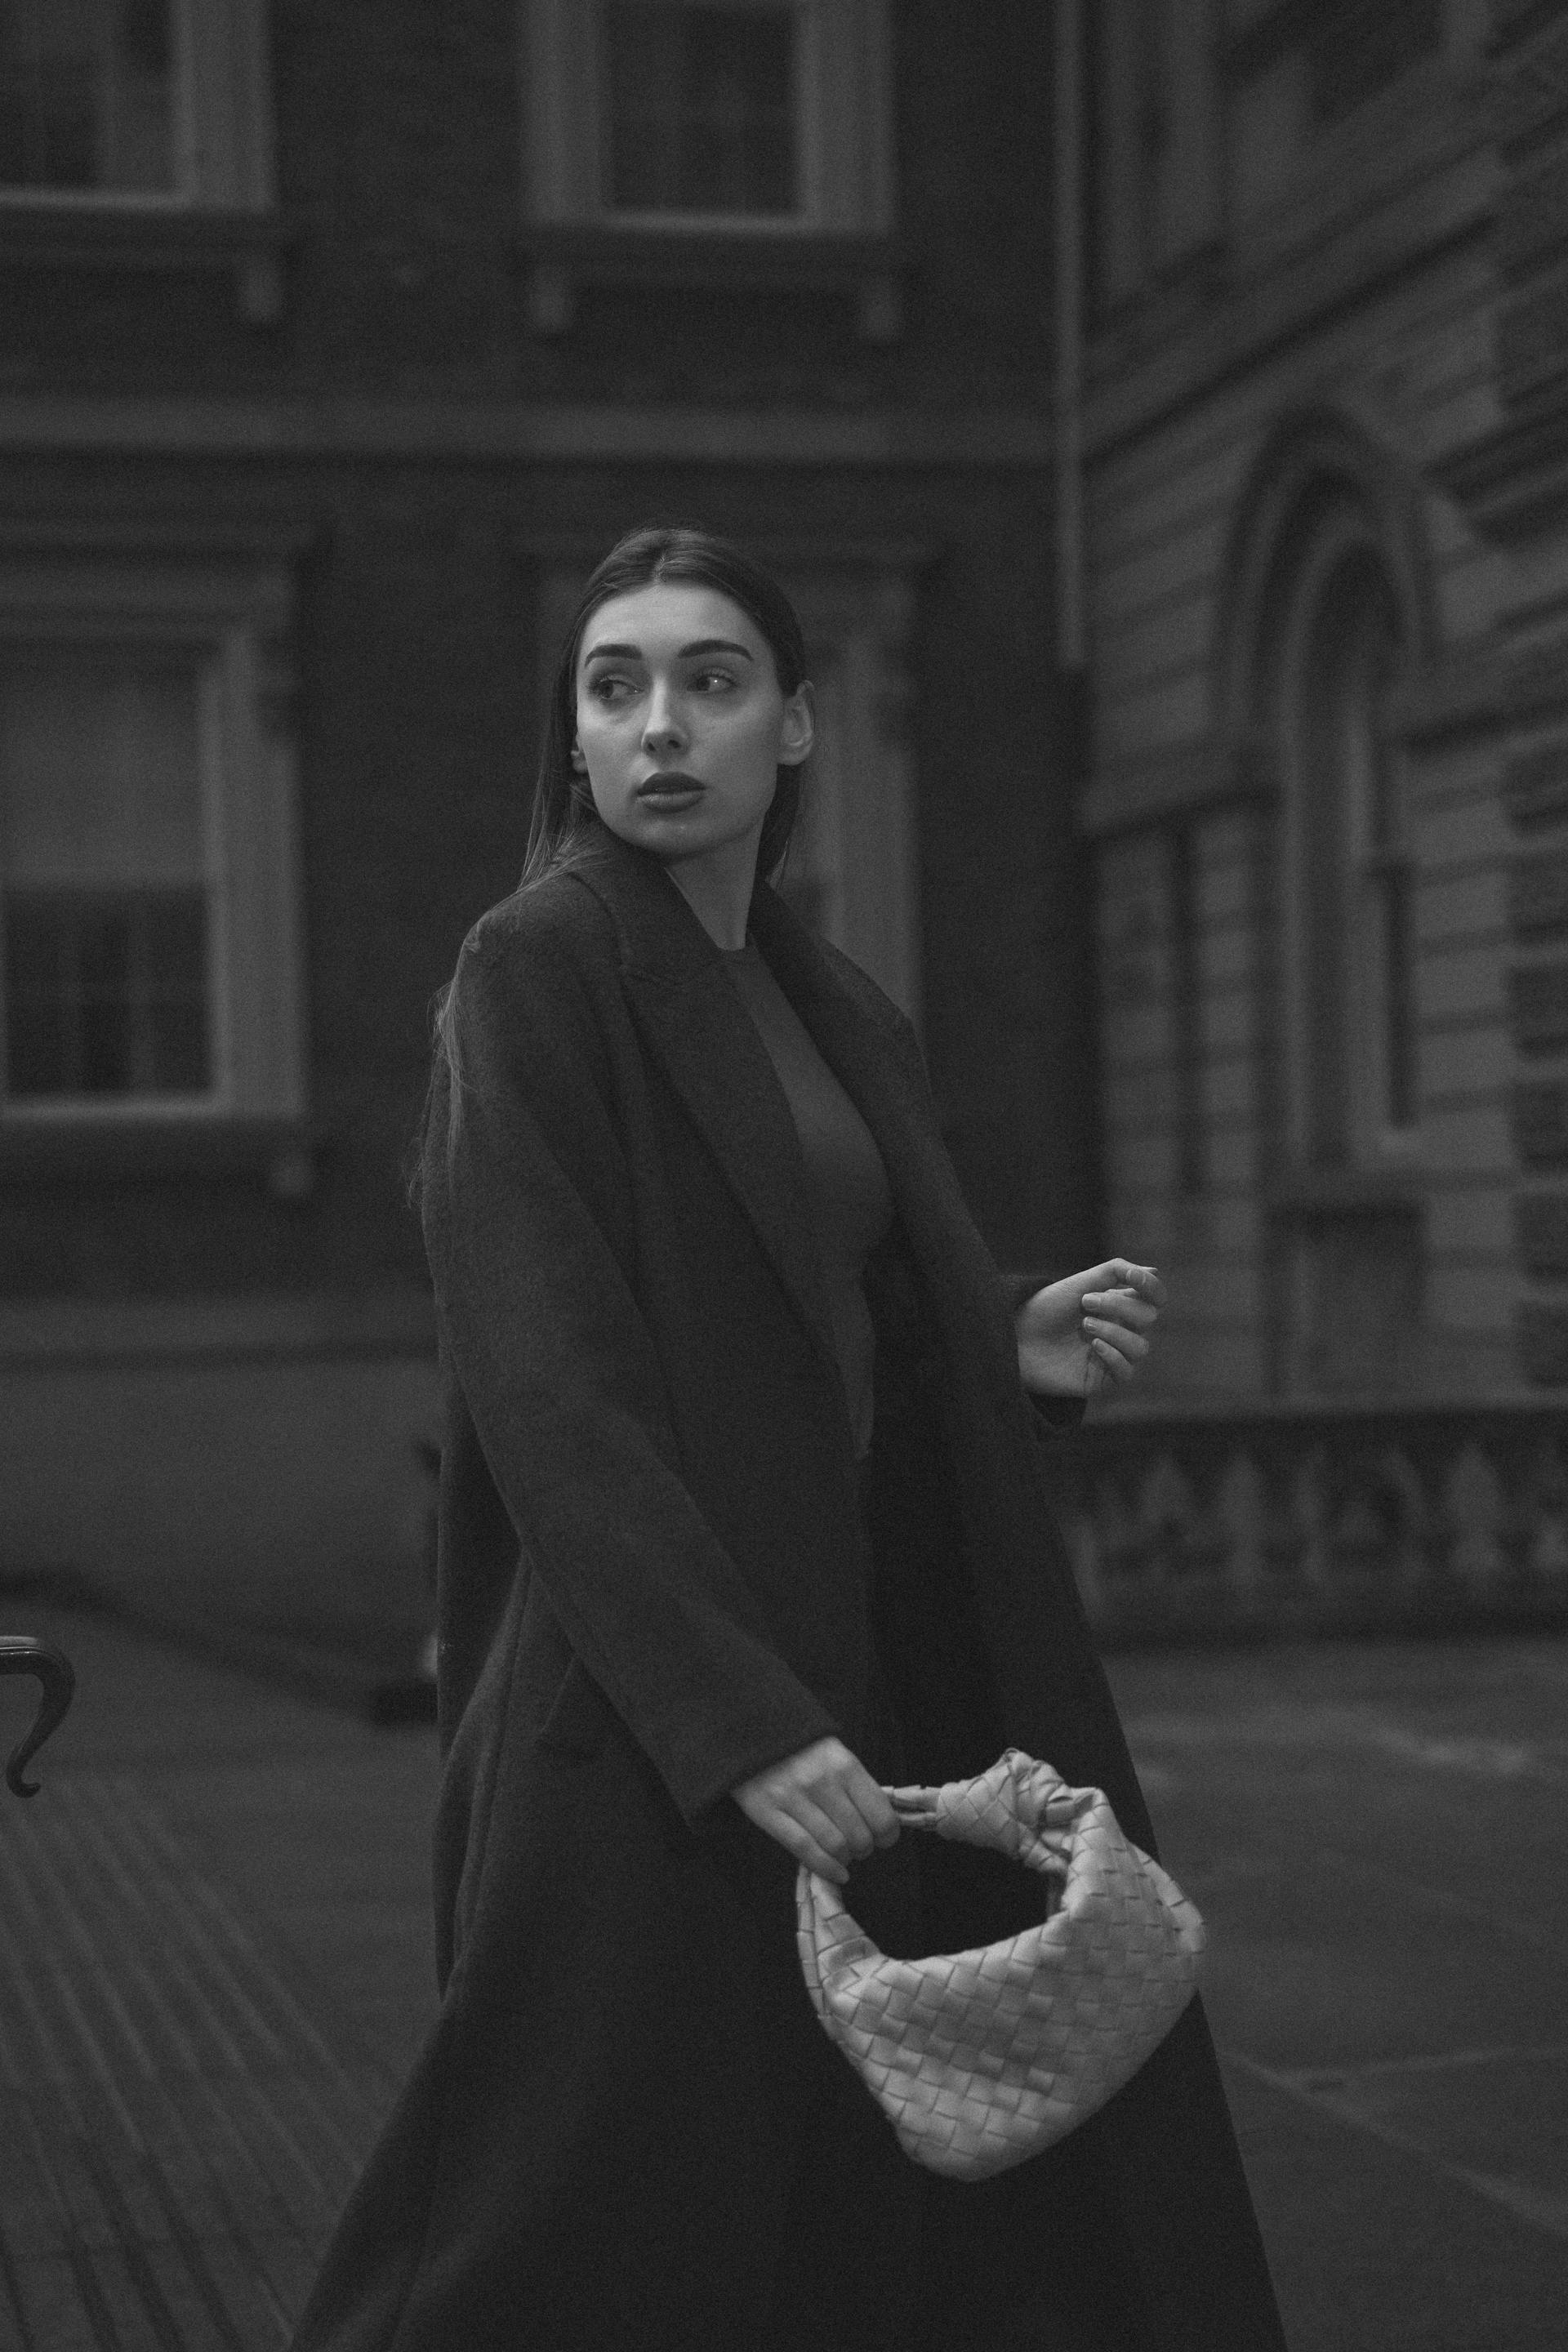 A woman walking away | Source: Pexels